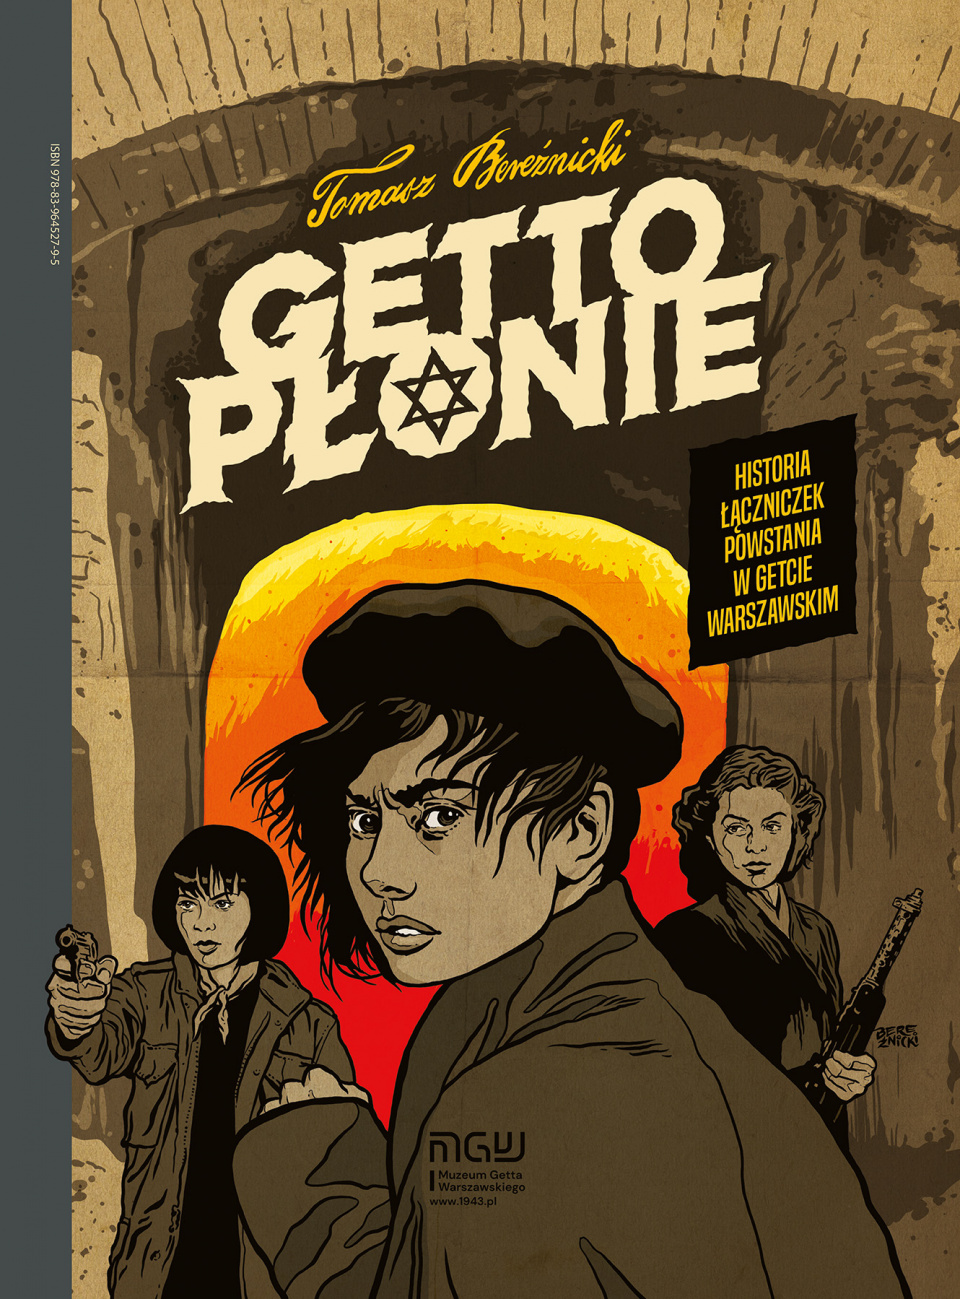 komiks getto [fot. źródło: https://sklep.bereznicki.pl/produkt/getto-plonie-ghetto-burning/]